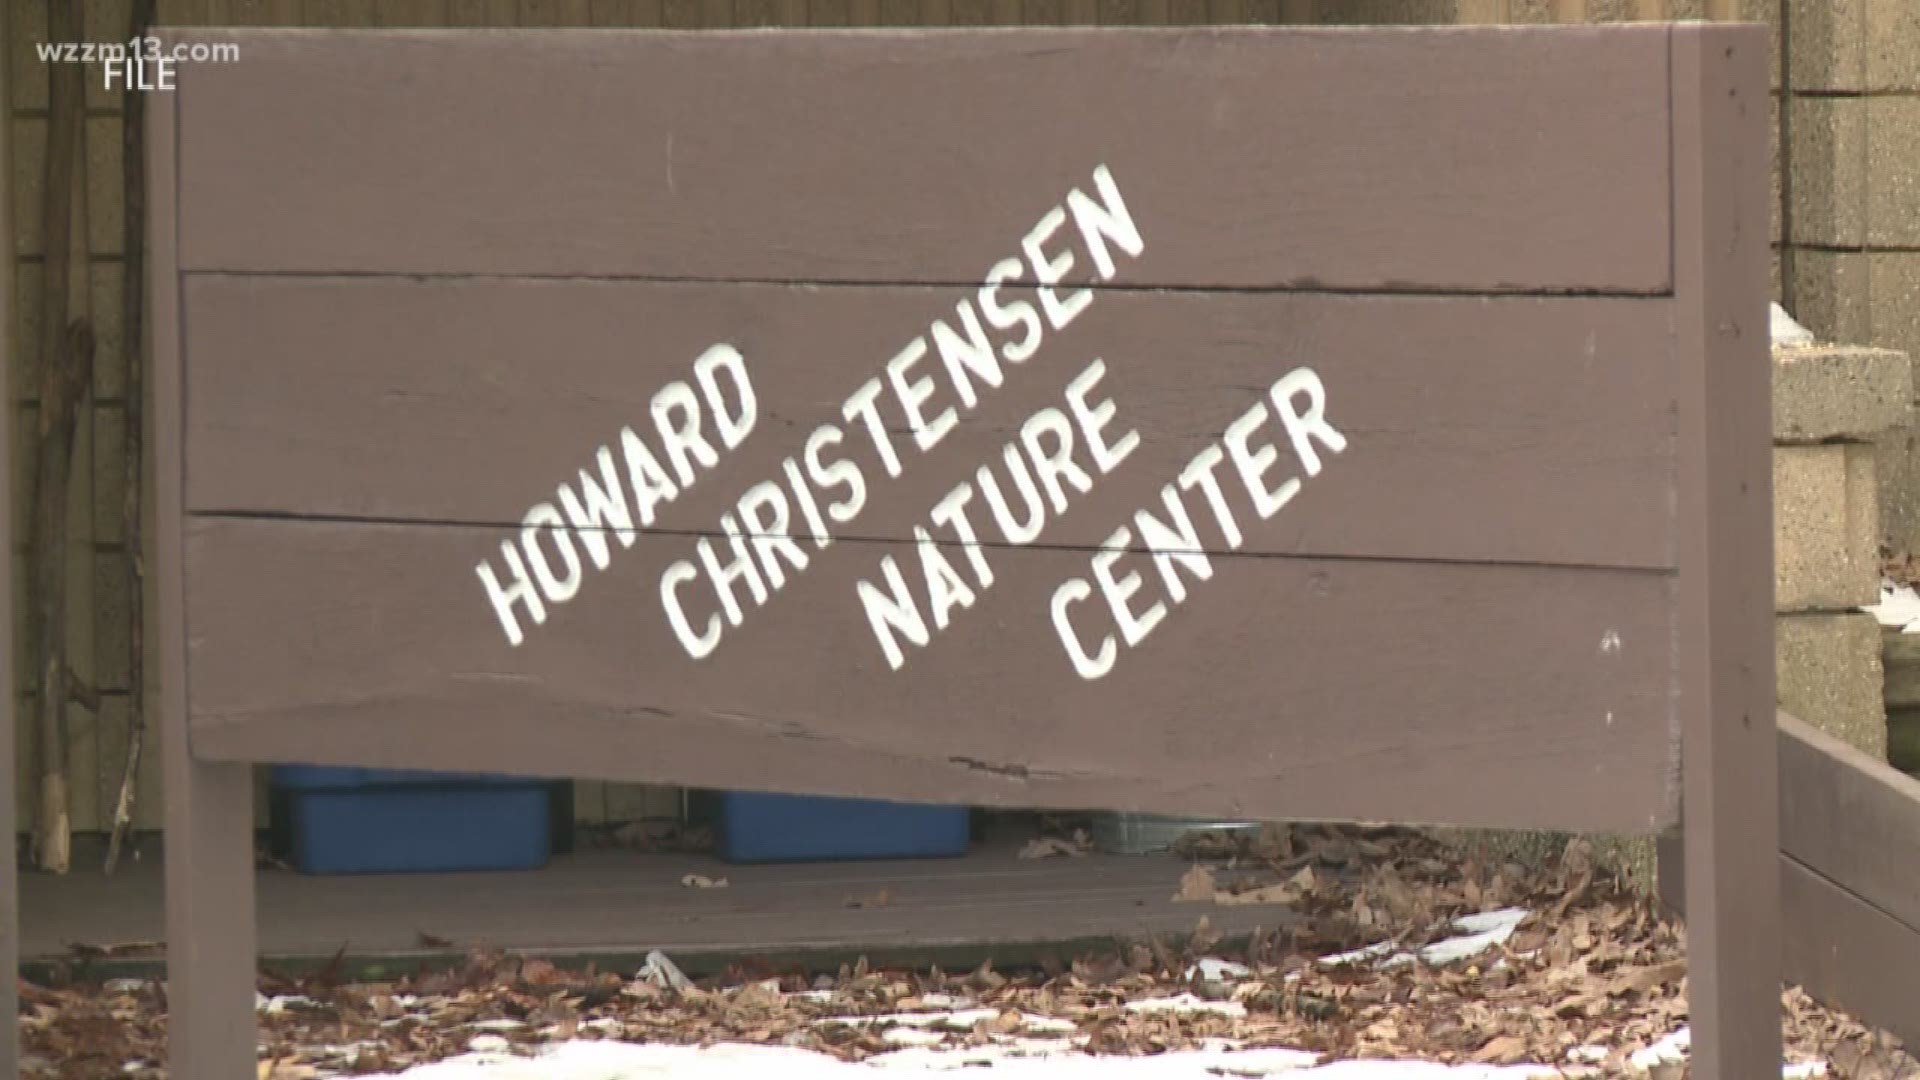 Former nature center director sentenced for embezzlement